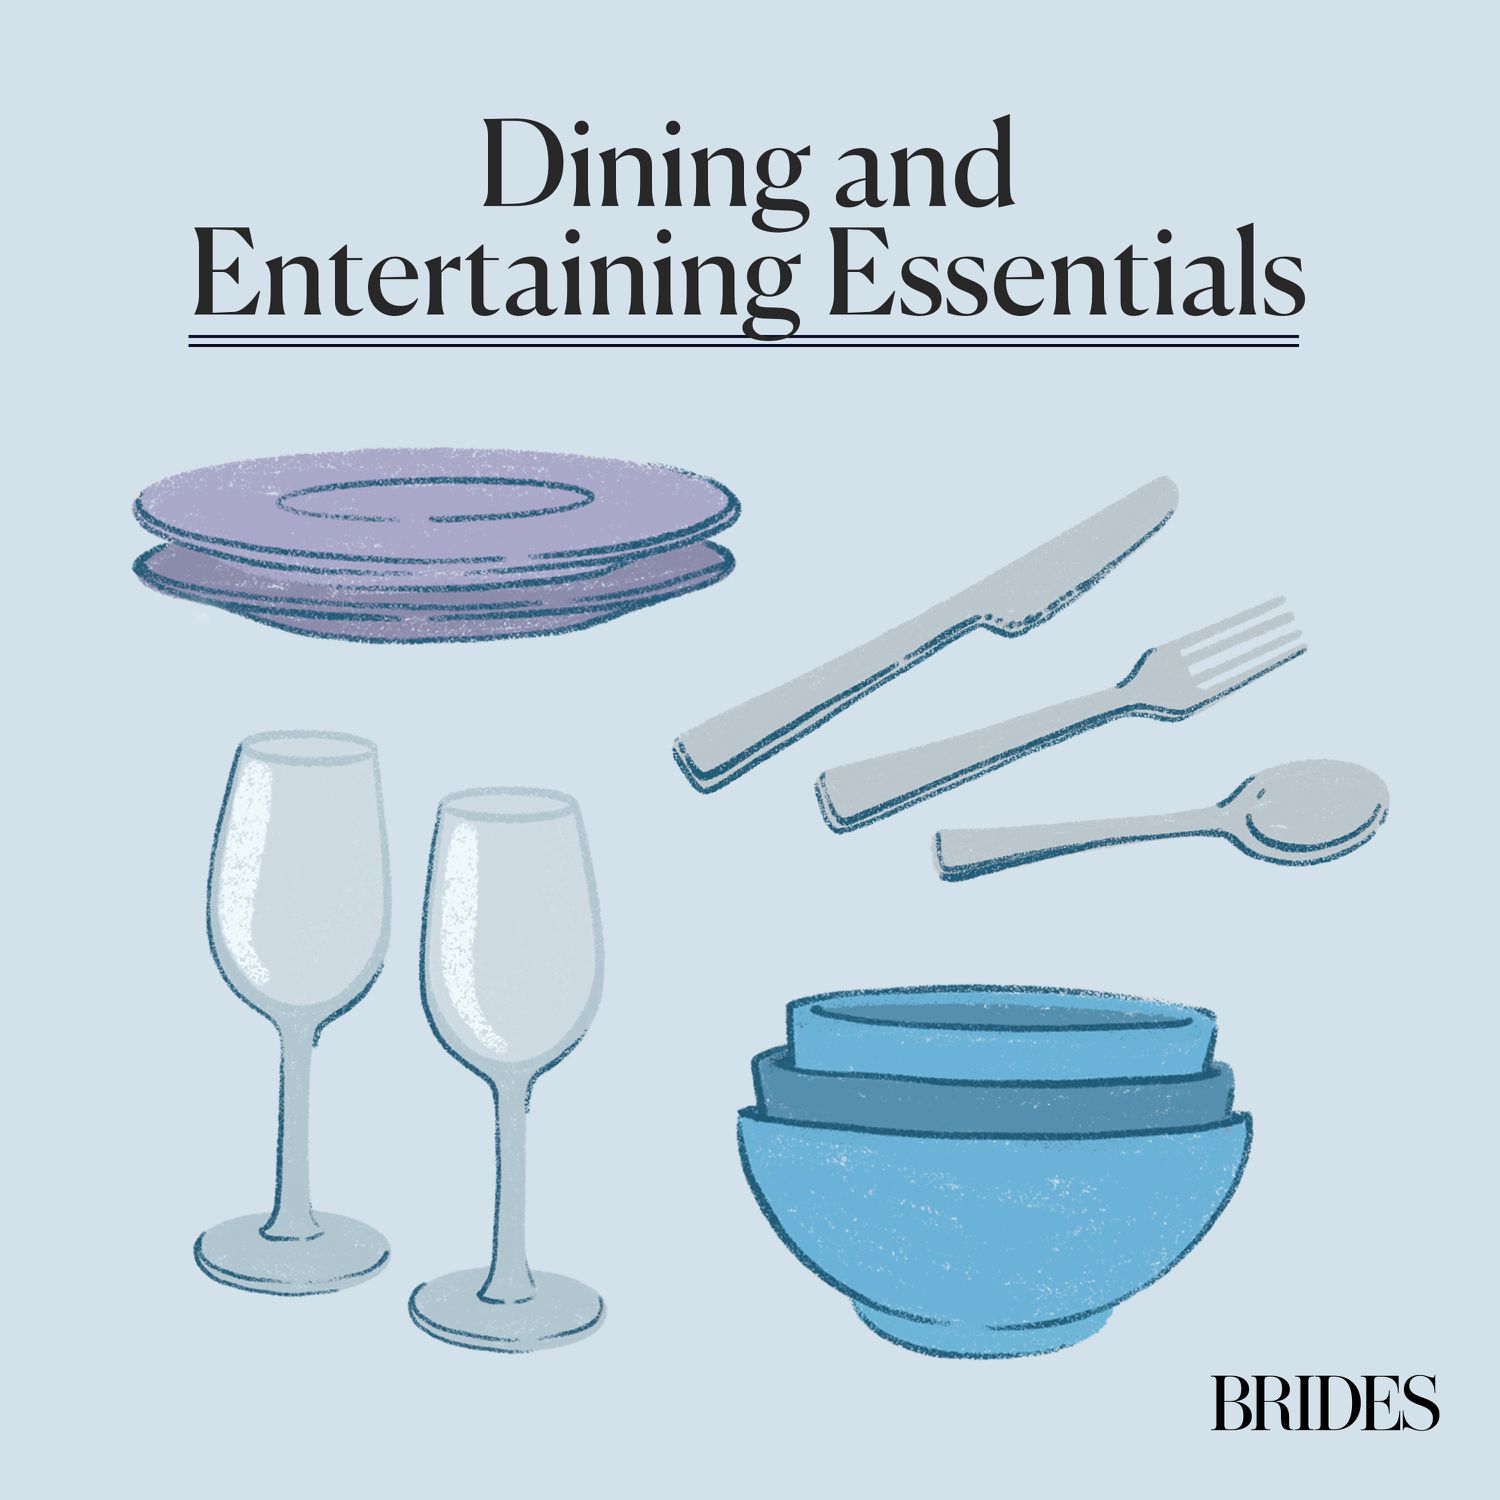 Wedding Registry Dining and Entertaining Essentials Illustration